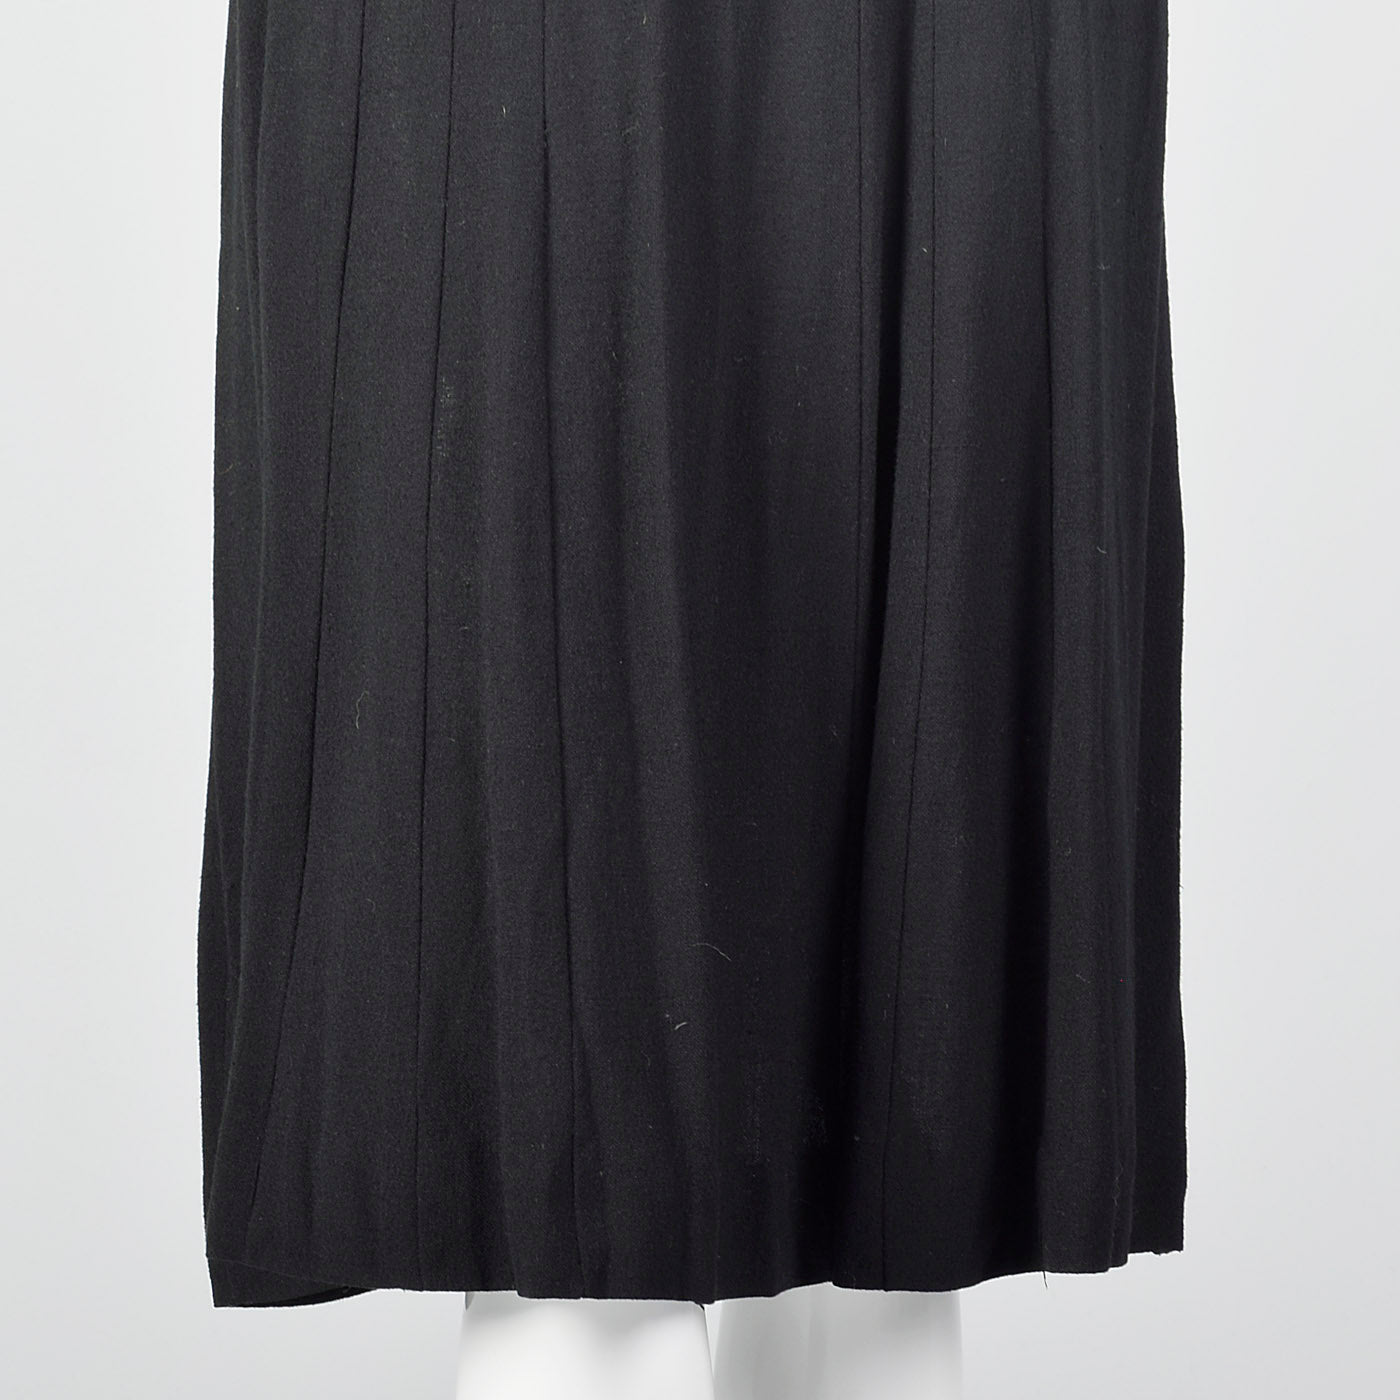 1930s Black Dress with Illusion Jacket